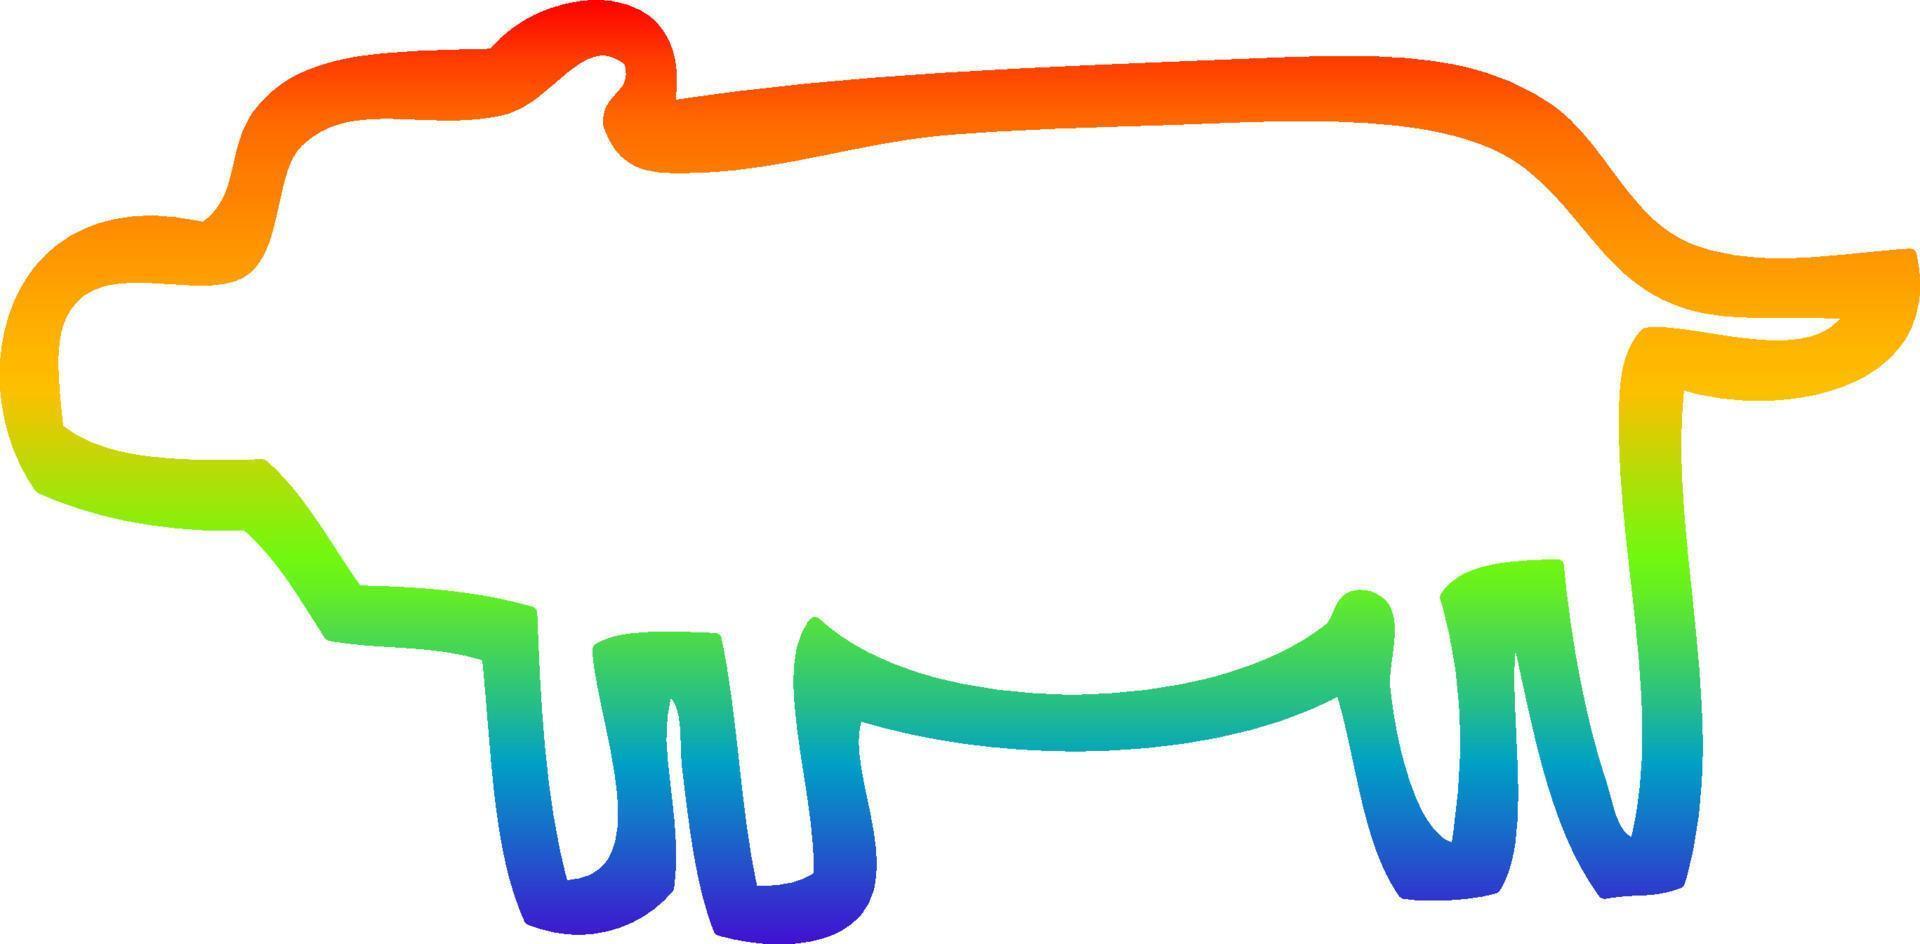 rainbow gradient line drawing cartoon animal symbol vector